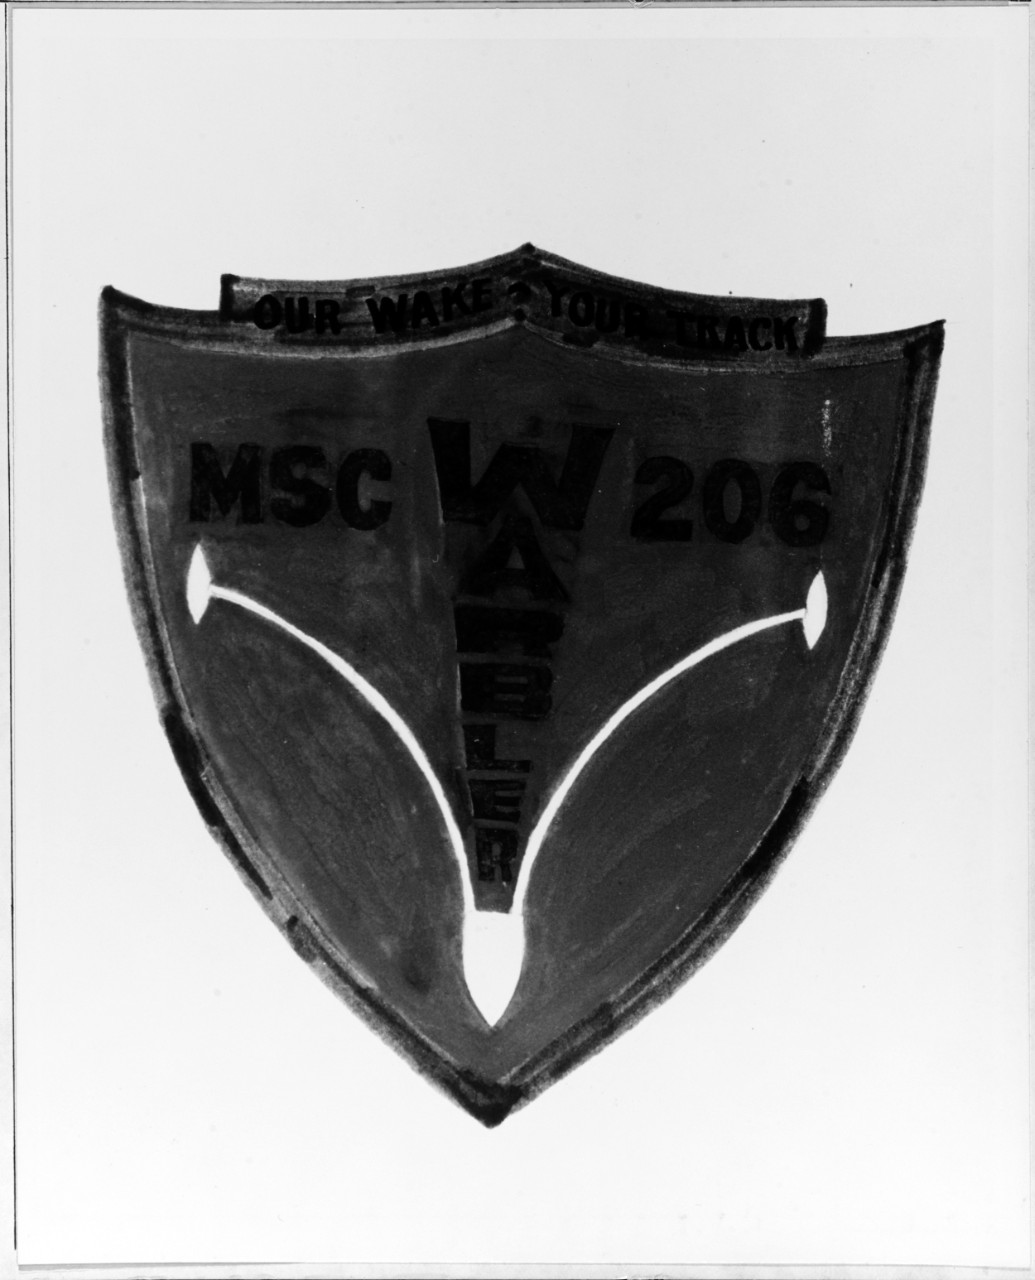 Insignia: USS WARBLER (MSC-206)